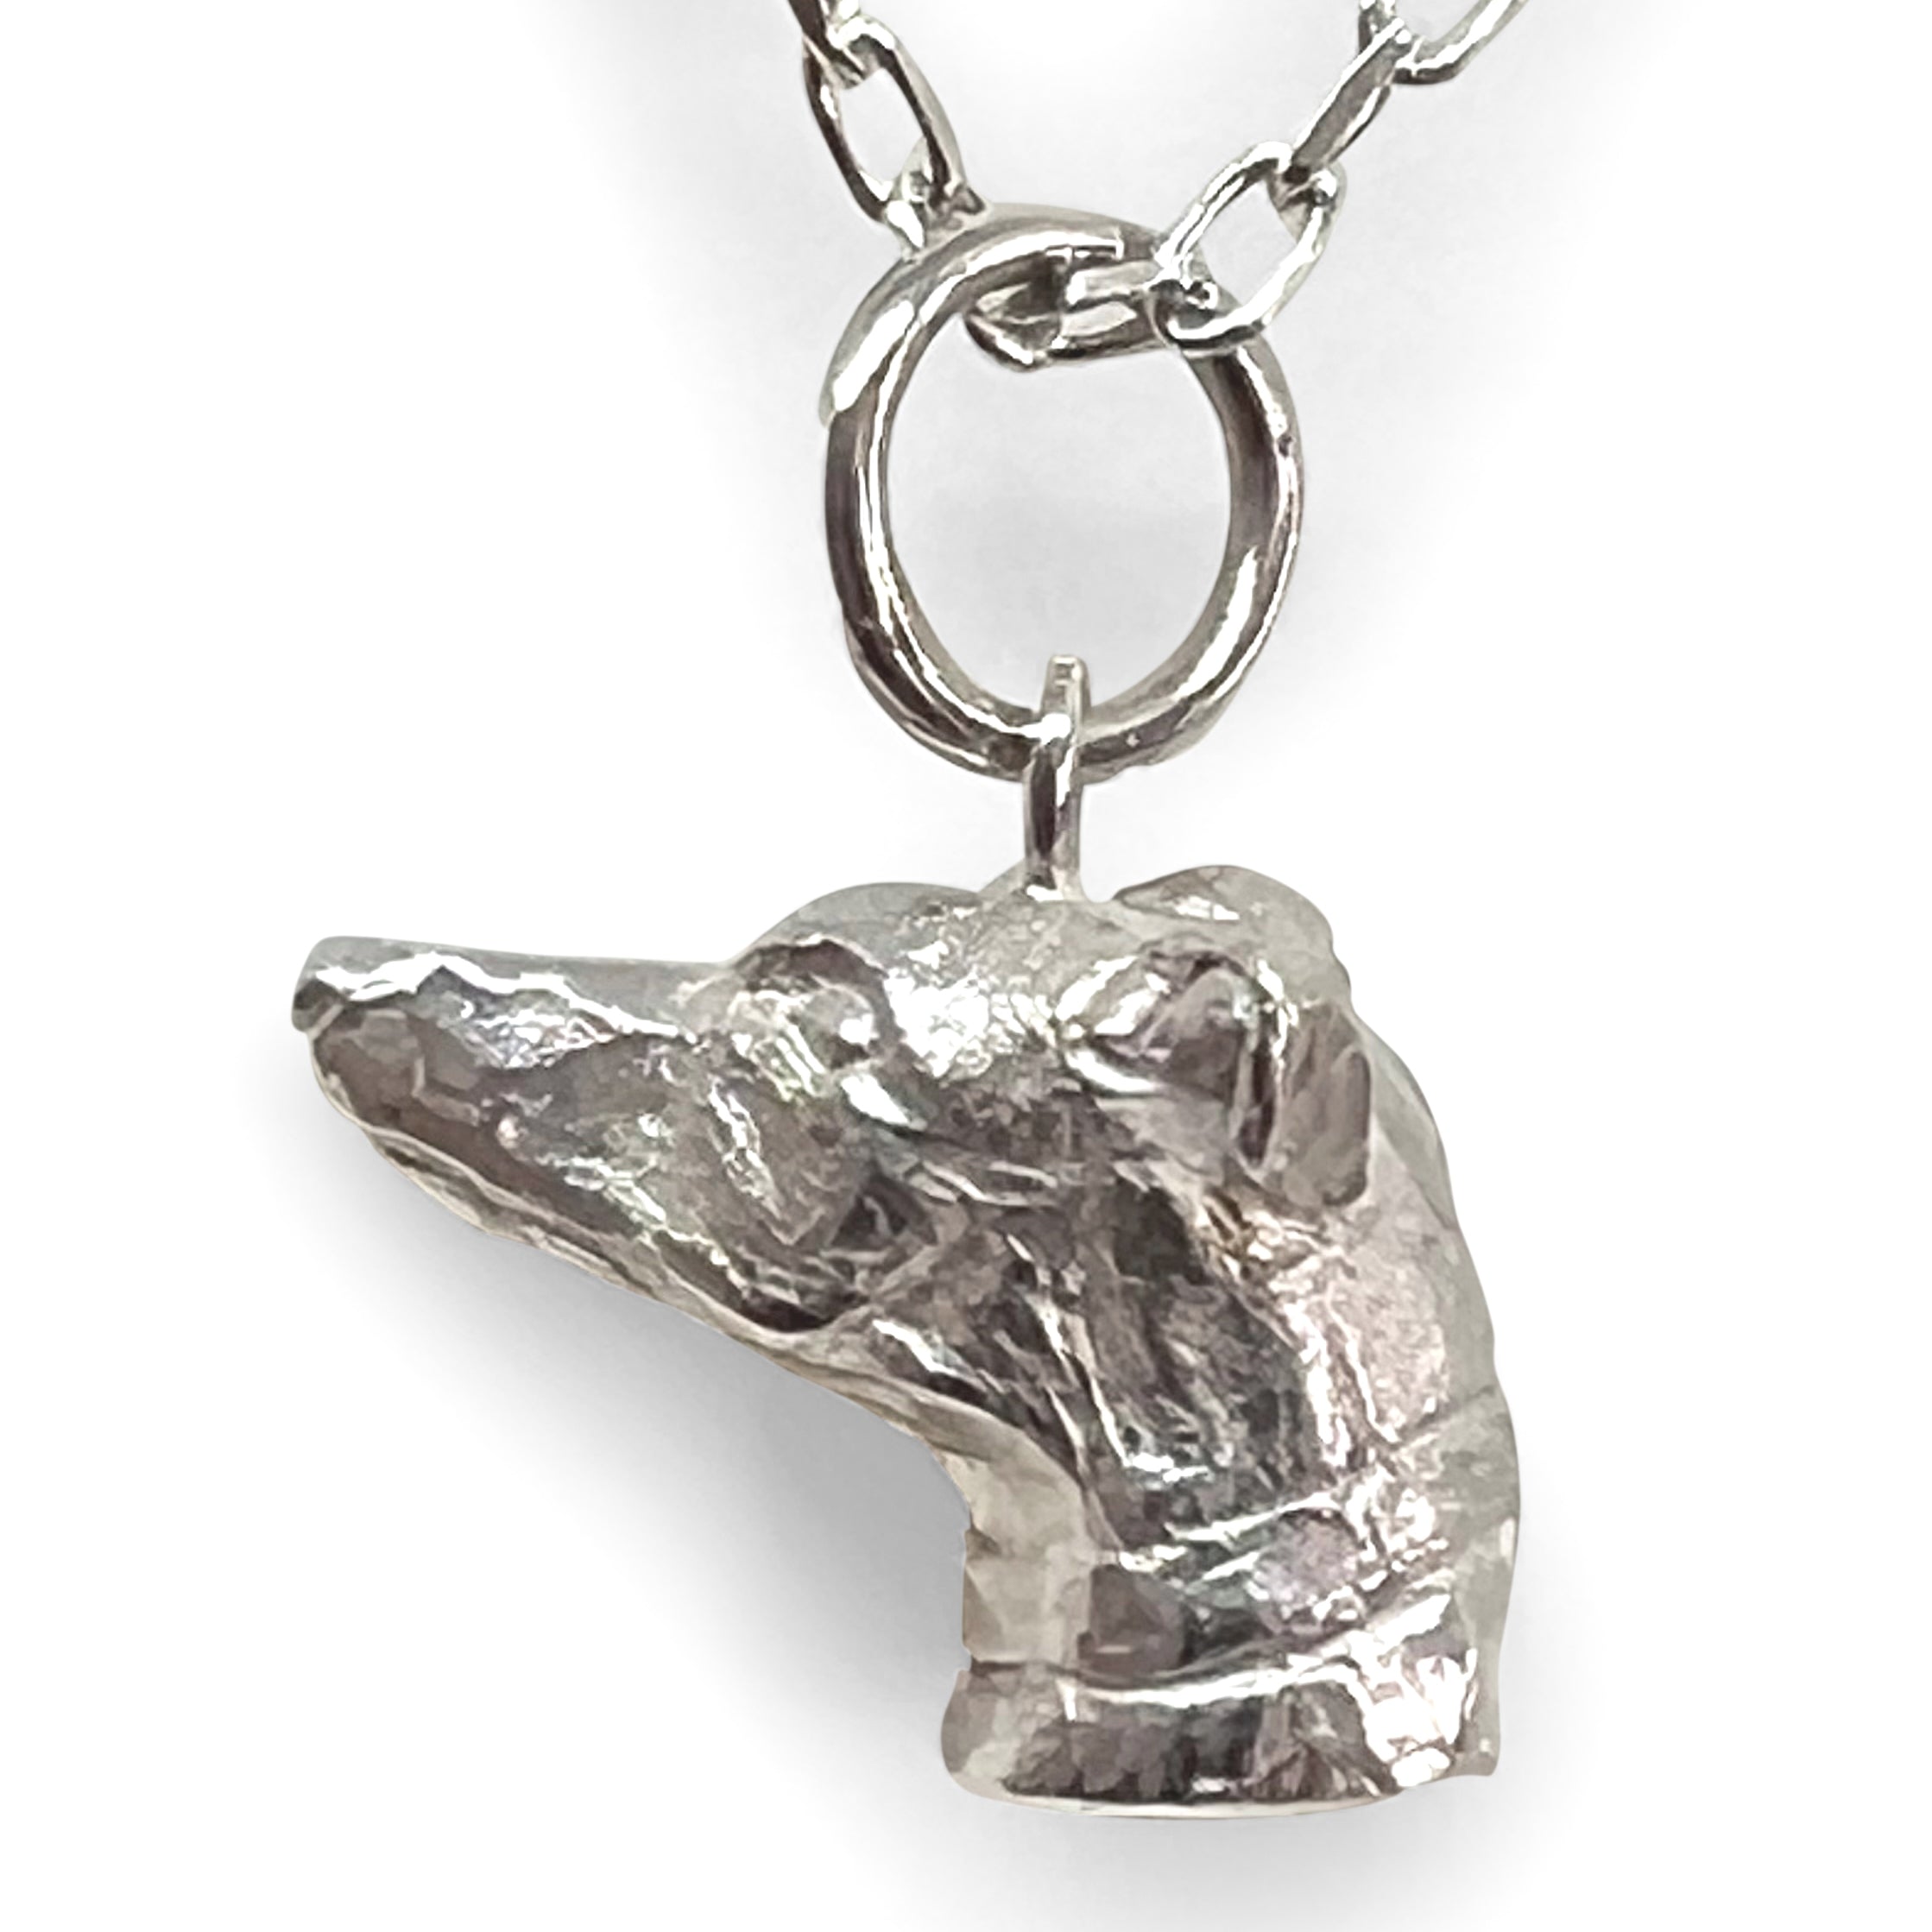 Greyhound Pendant Charm by Paul Eaton Sculptor